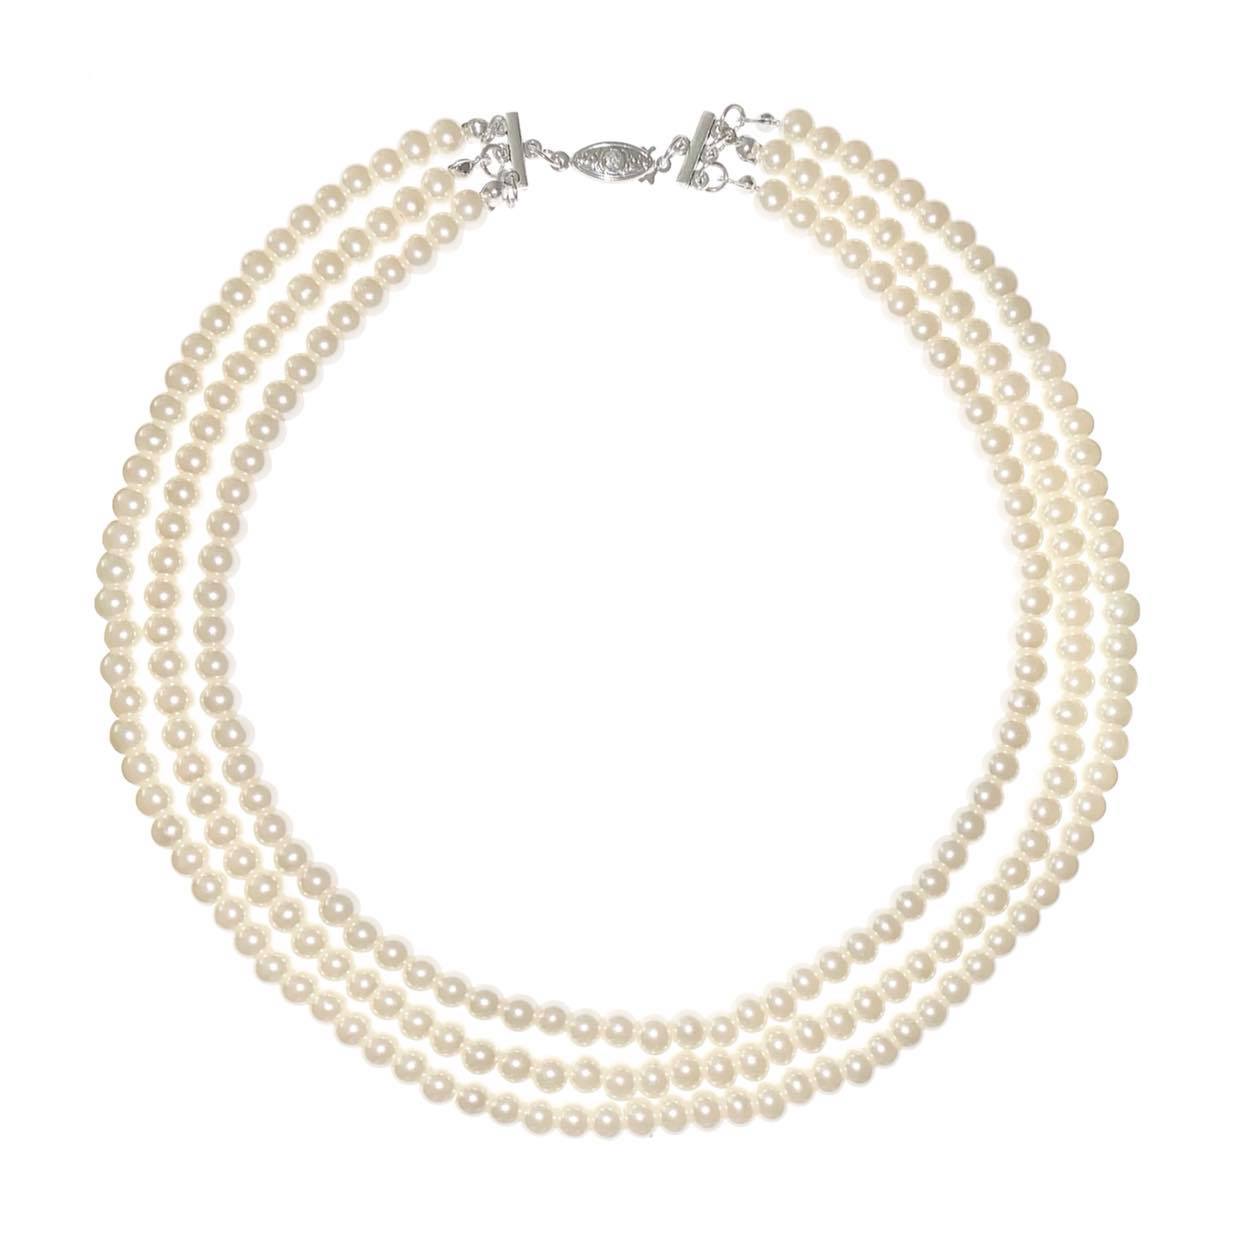 3 Strand Imitation Pearl Necklace